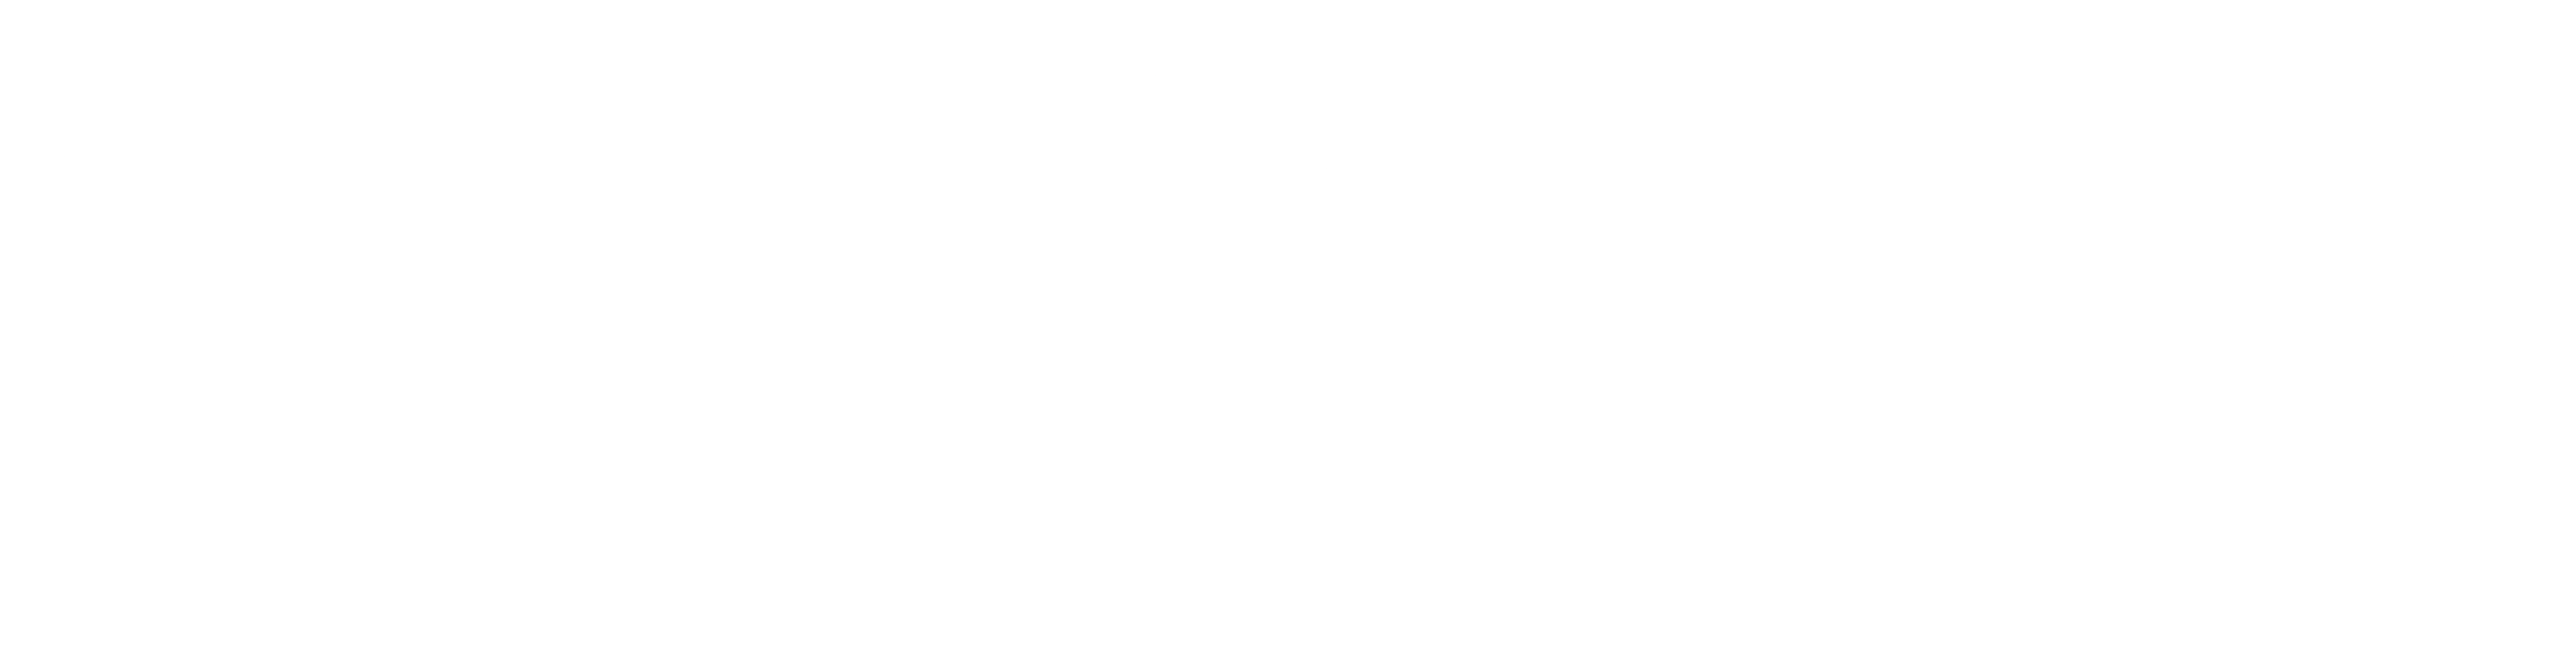 Copra's logo